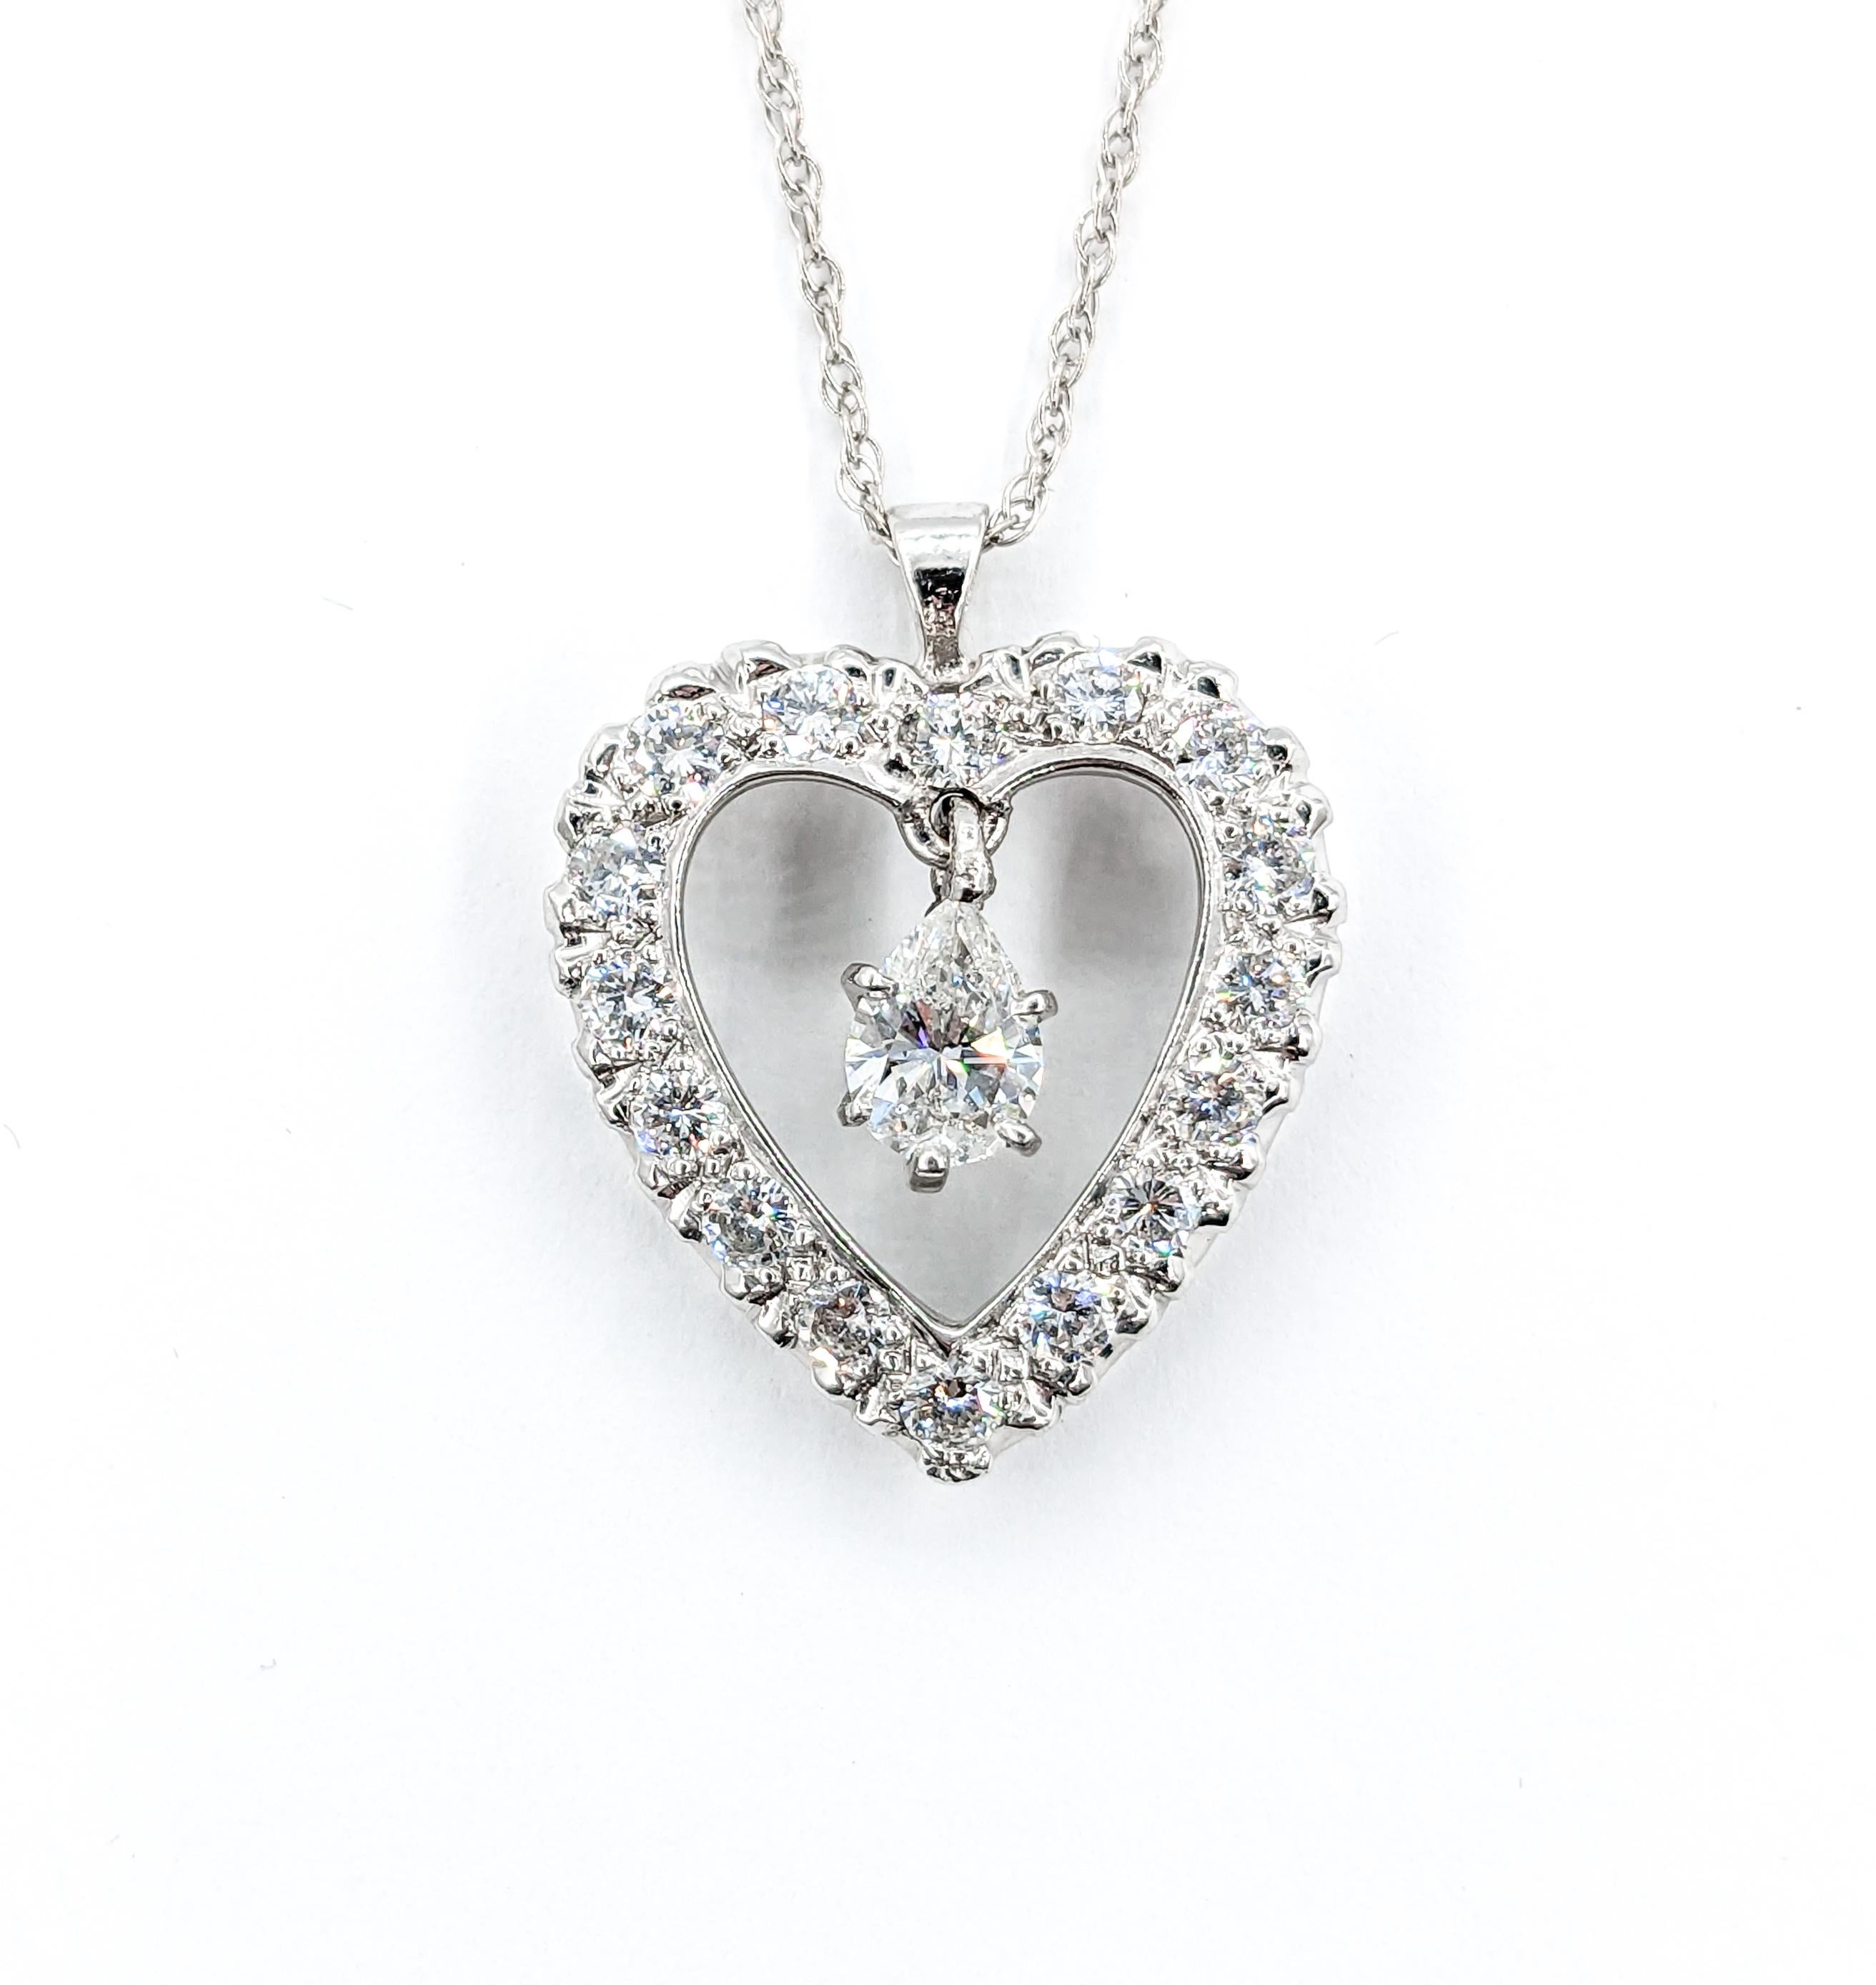  Feminine 1.30ctw Diamond Heart Pendant Necklace in White Gold For Sale 5